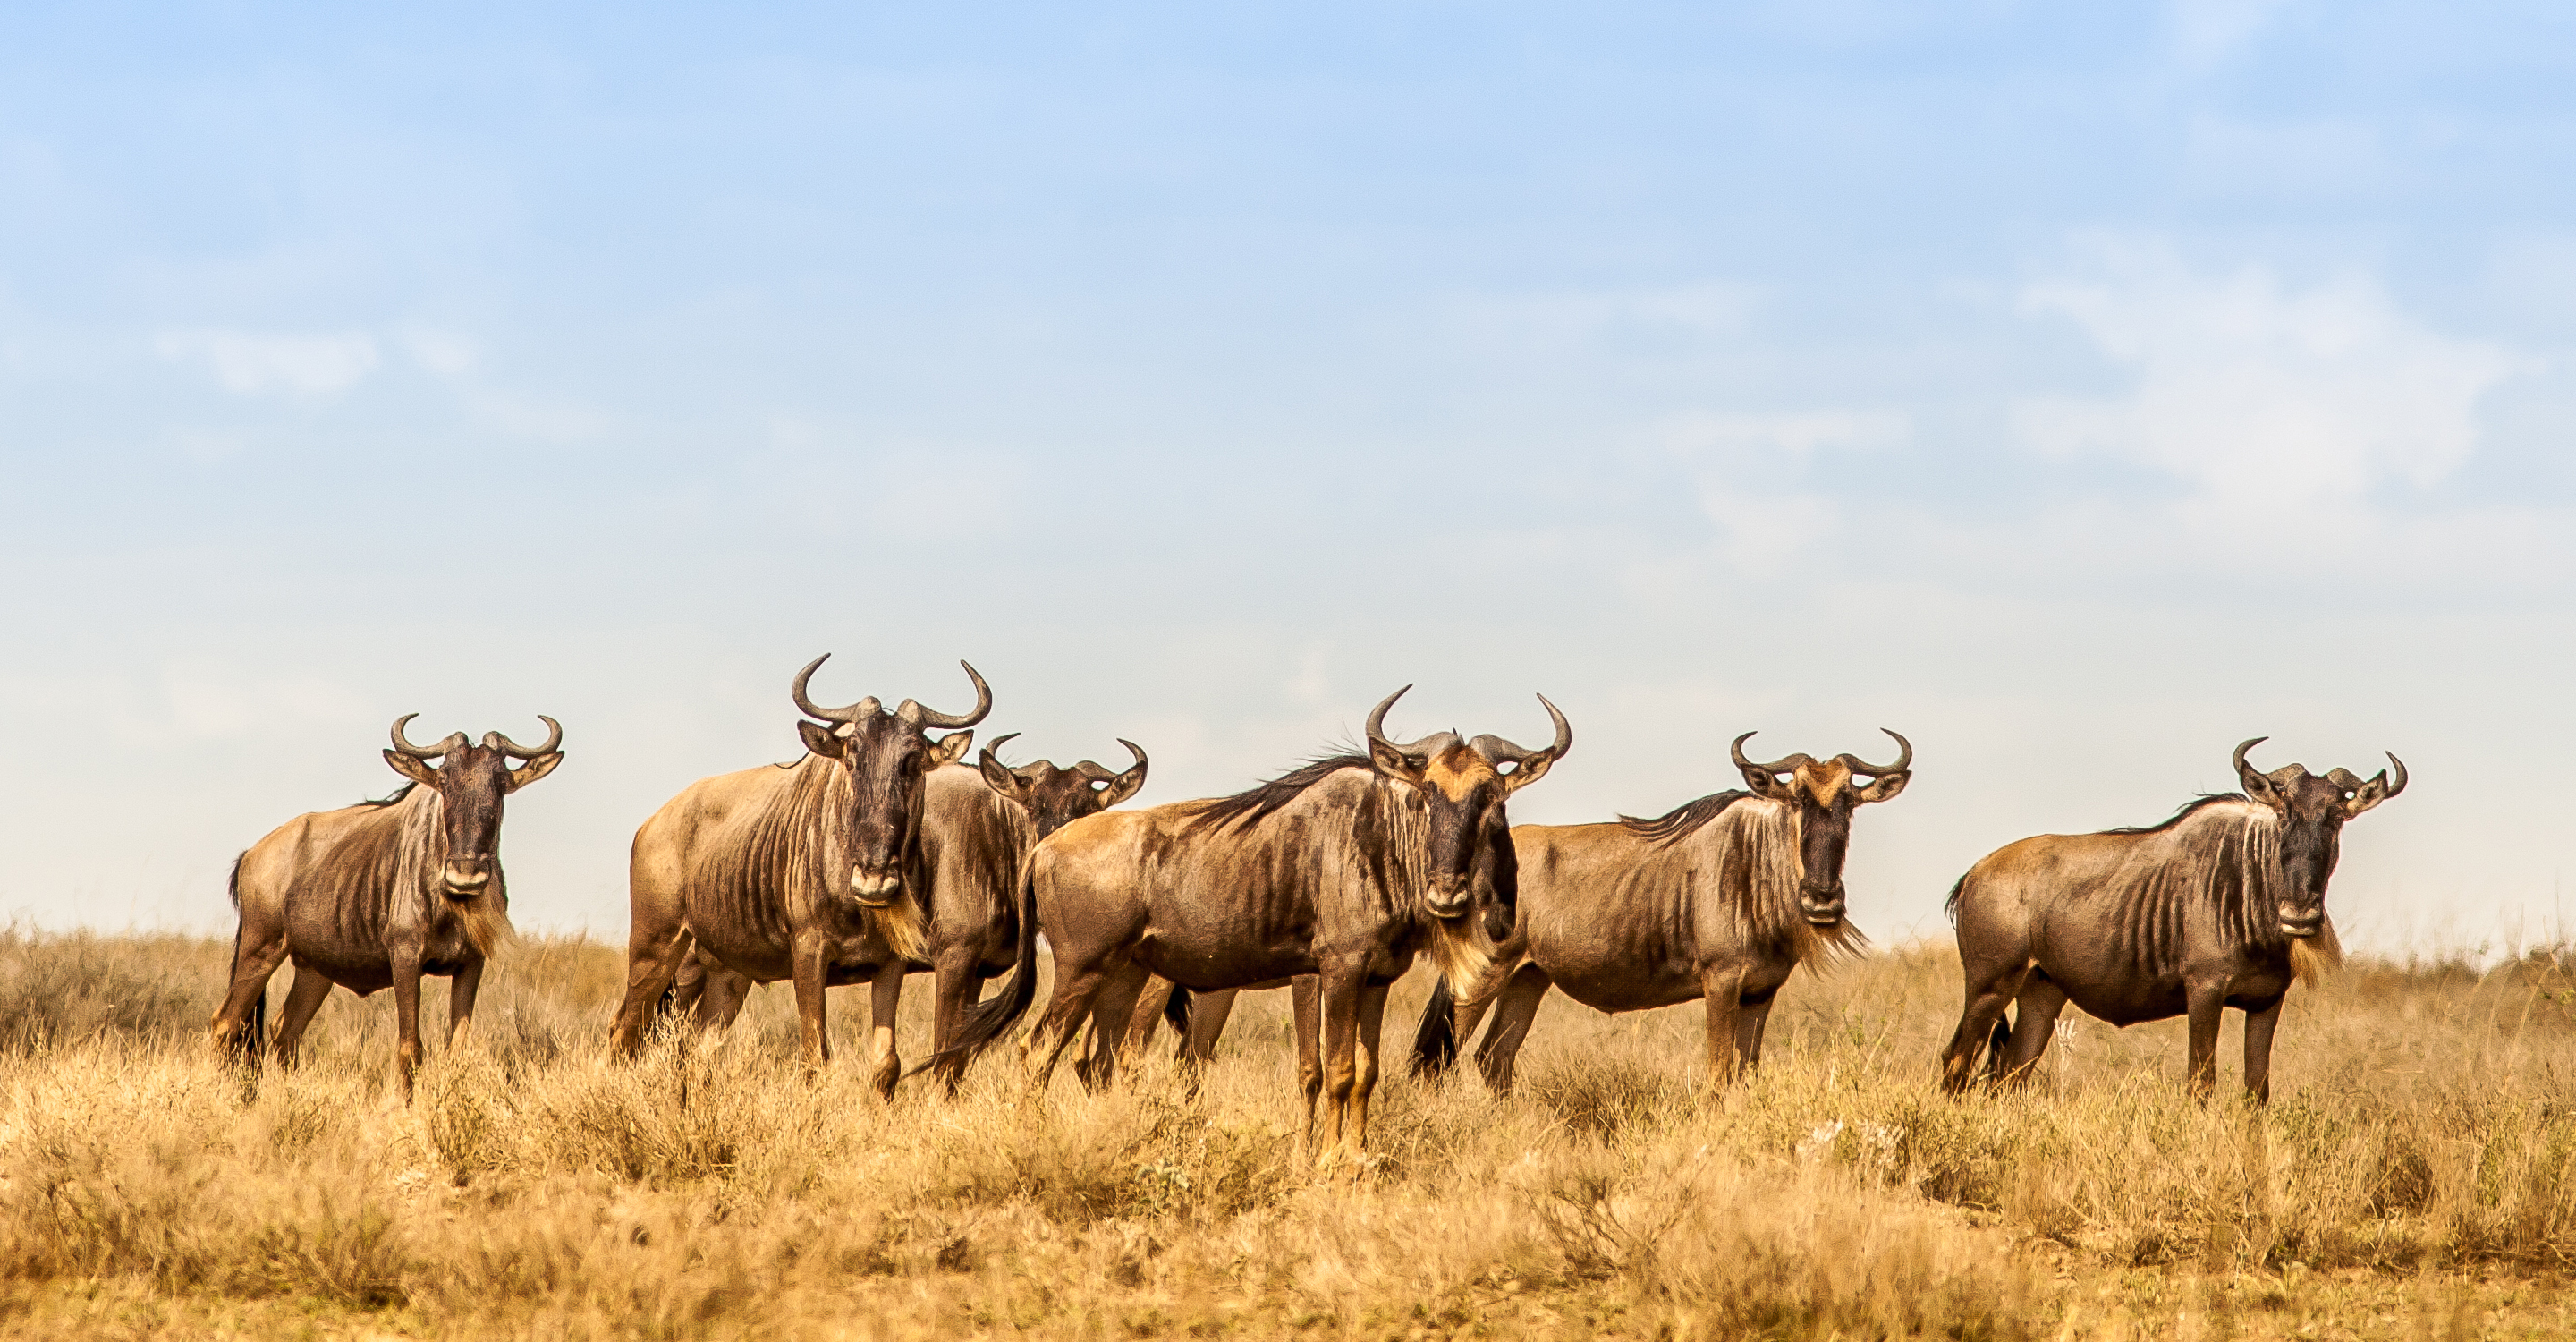 A herd of wildebeests in the Serengeti, Tanzania